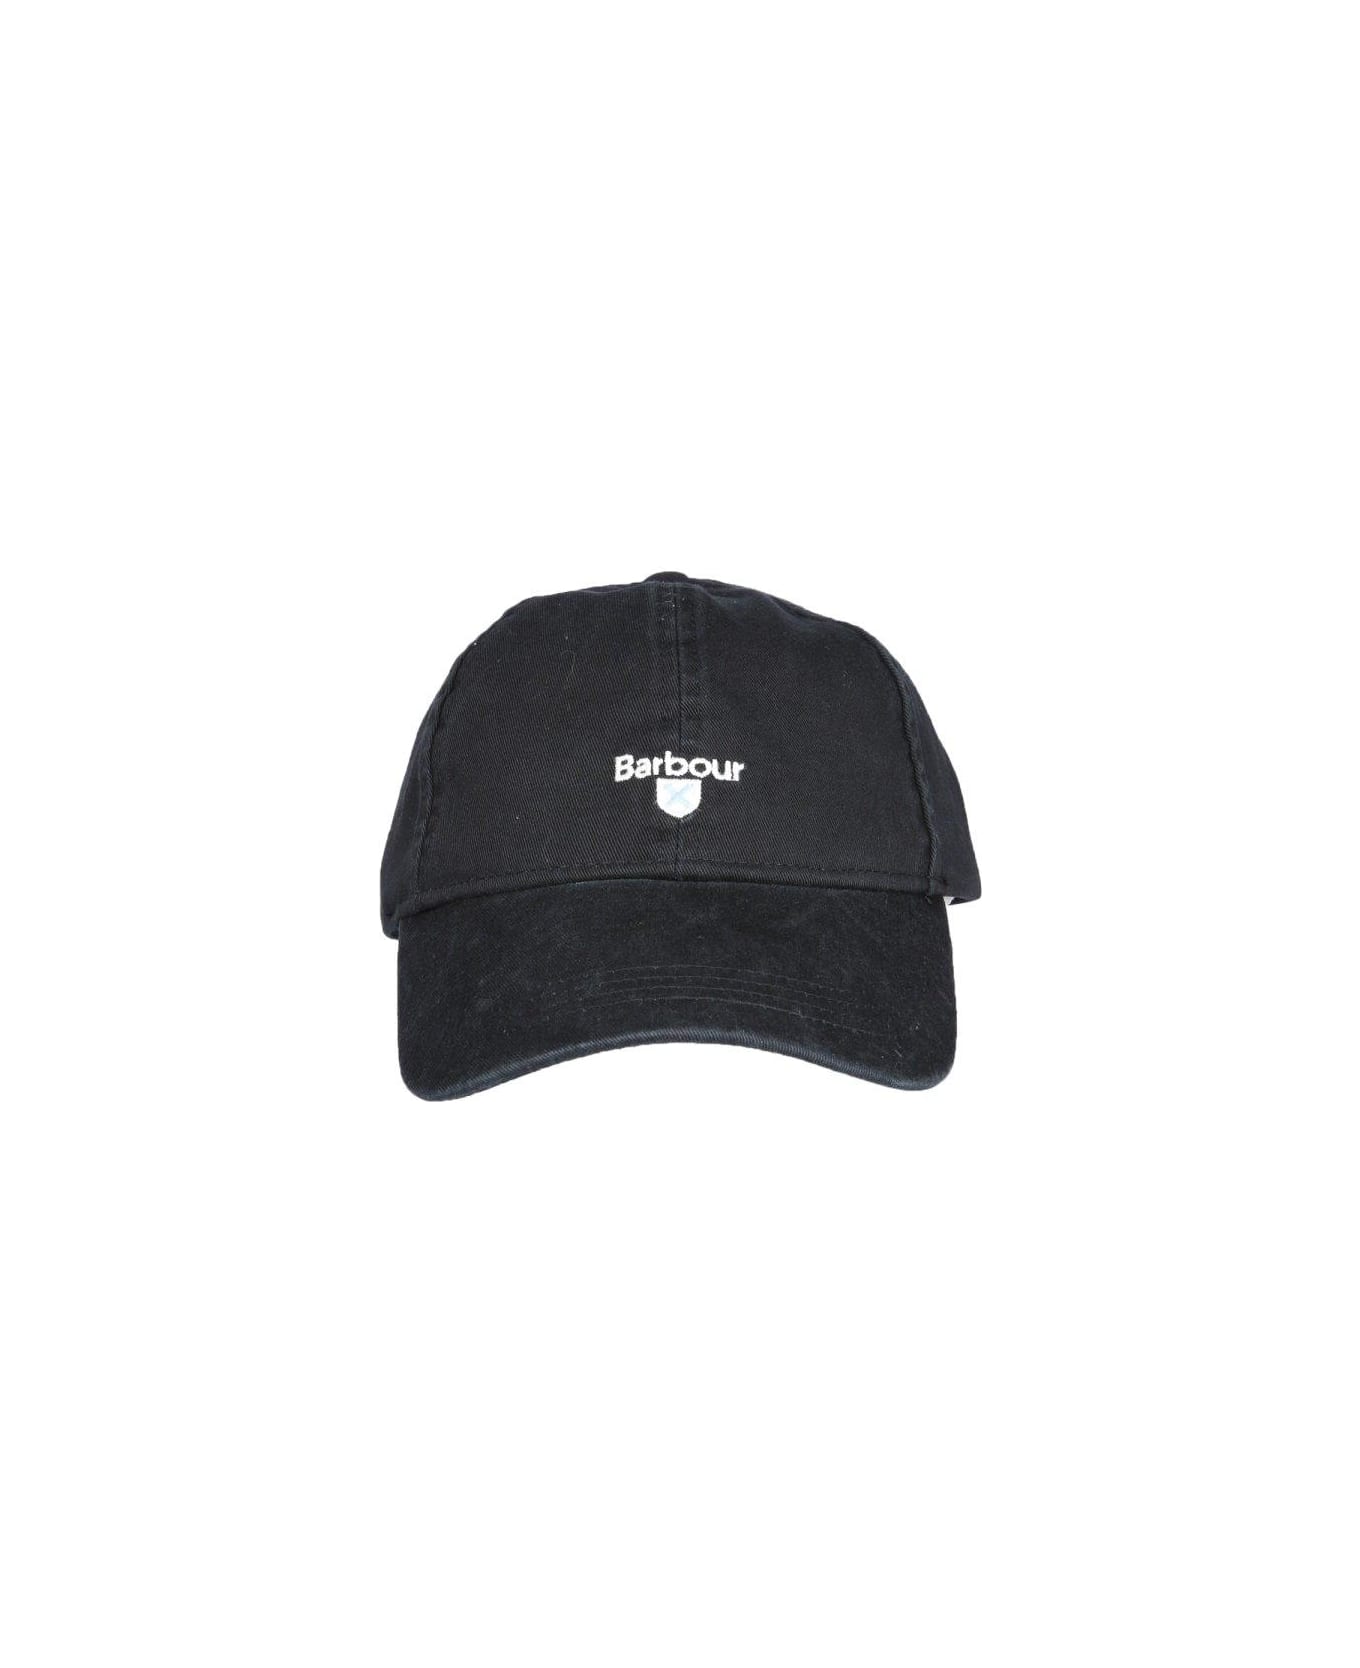 Barbour Logo Embroidered Baseball Cap - Black